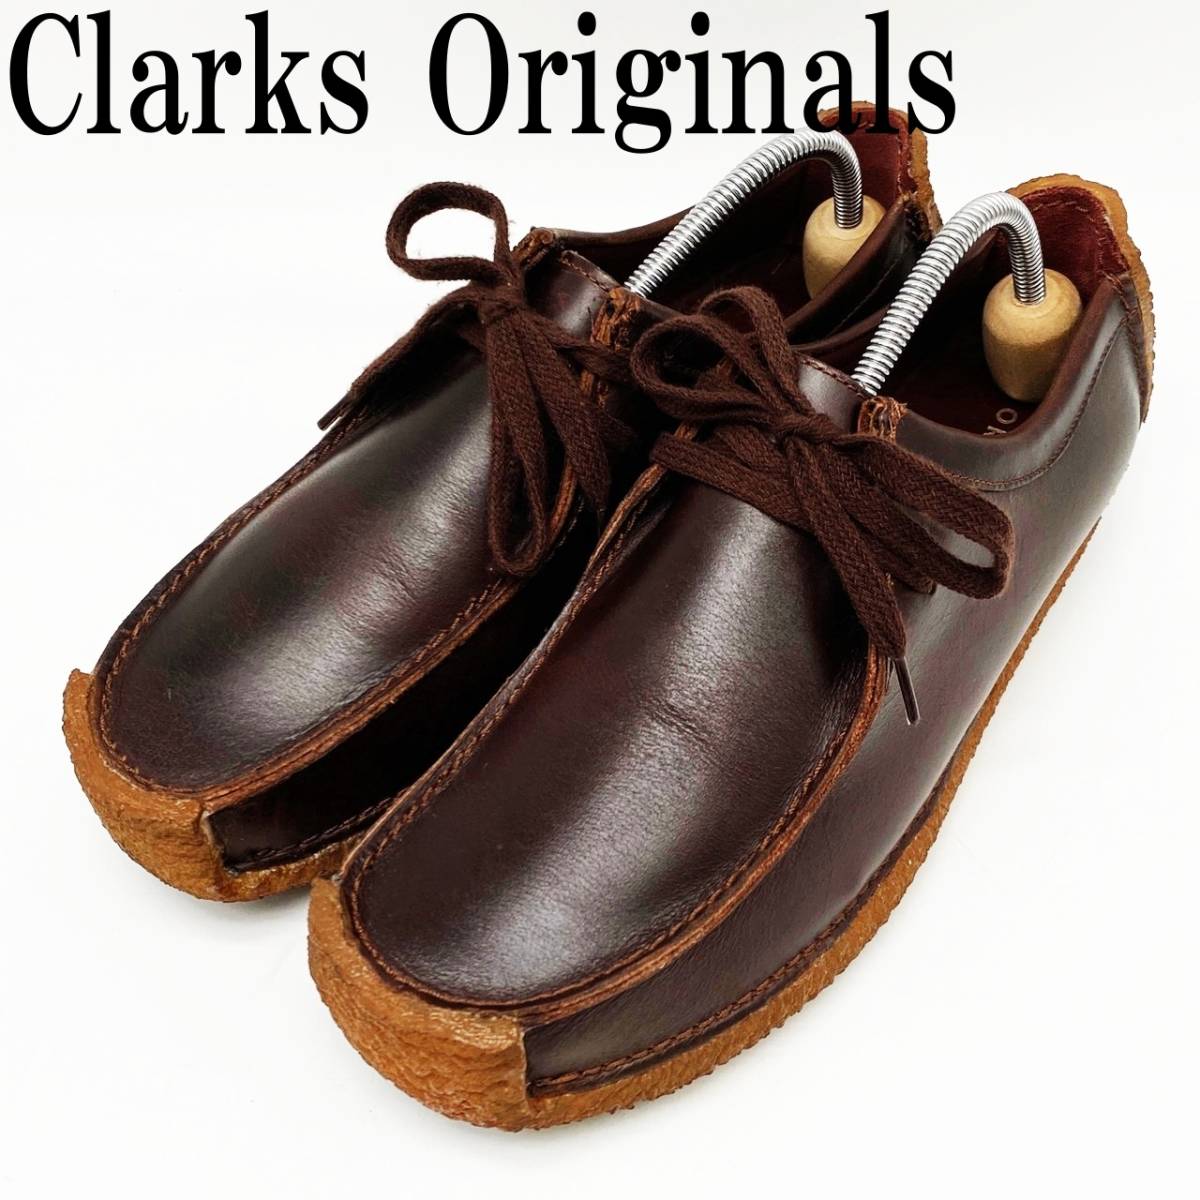 Clarks Originals クラークス オリジナルズ Natalie ナタリー 11826 UK7G 革靴 ダークブラウン メンズ_画像1